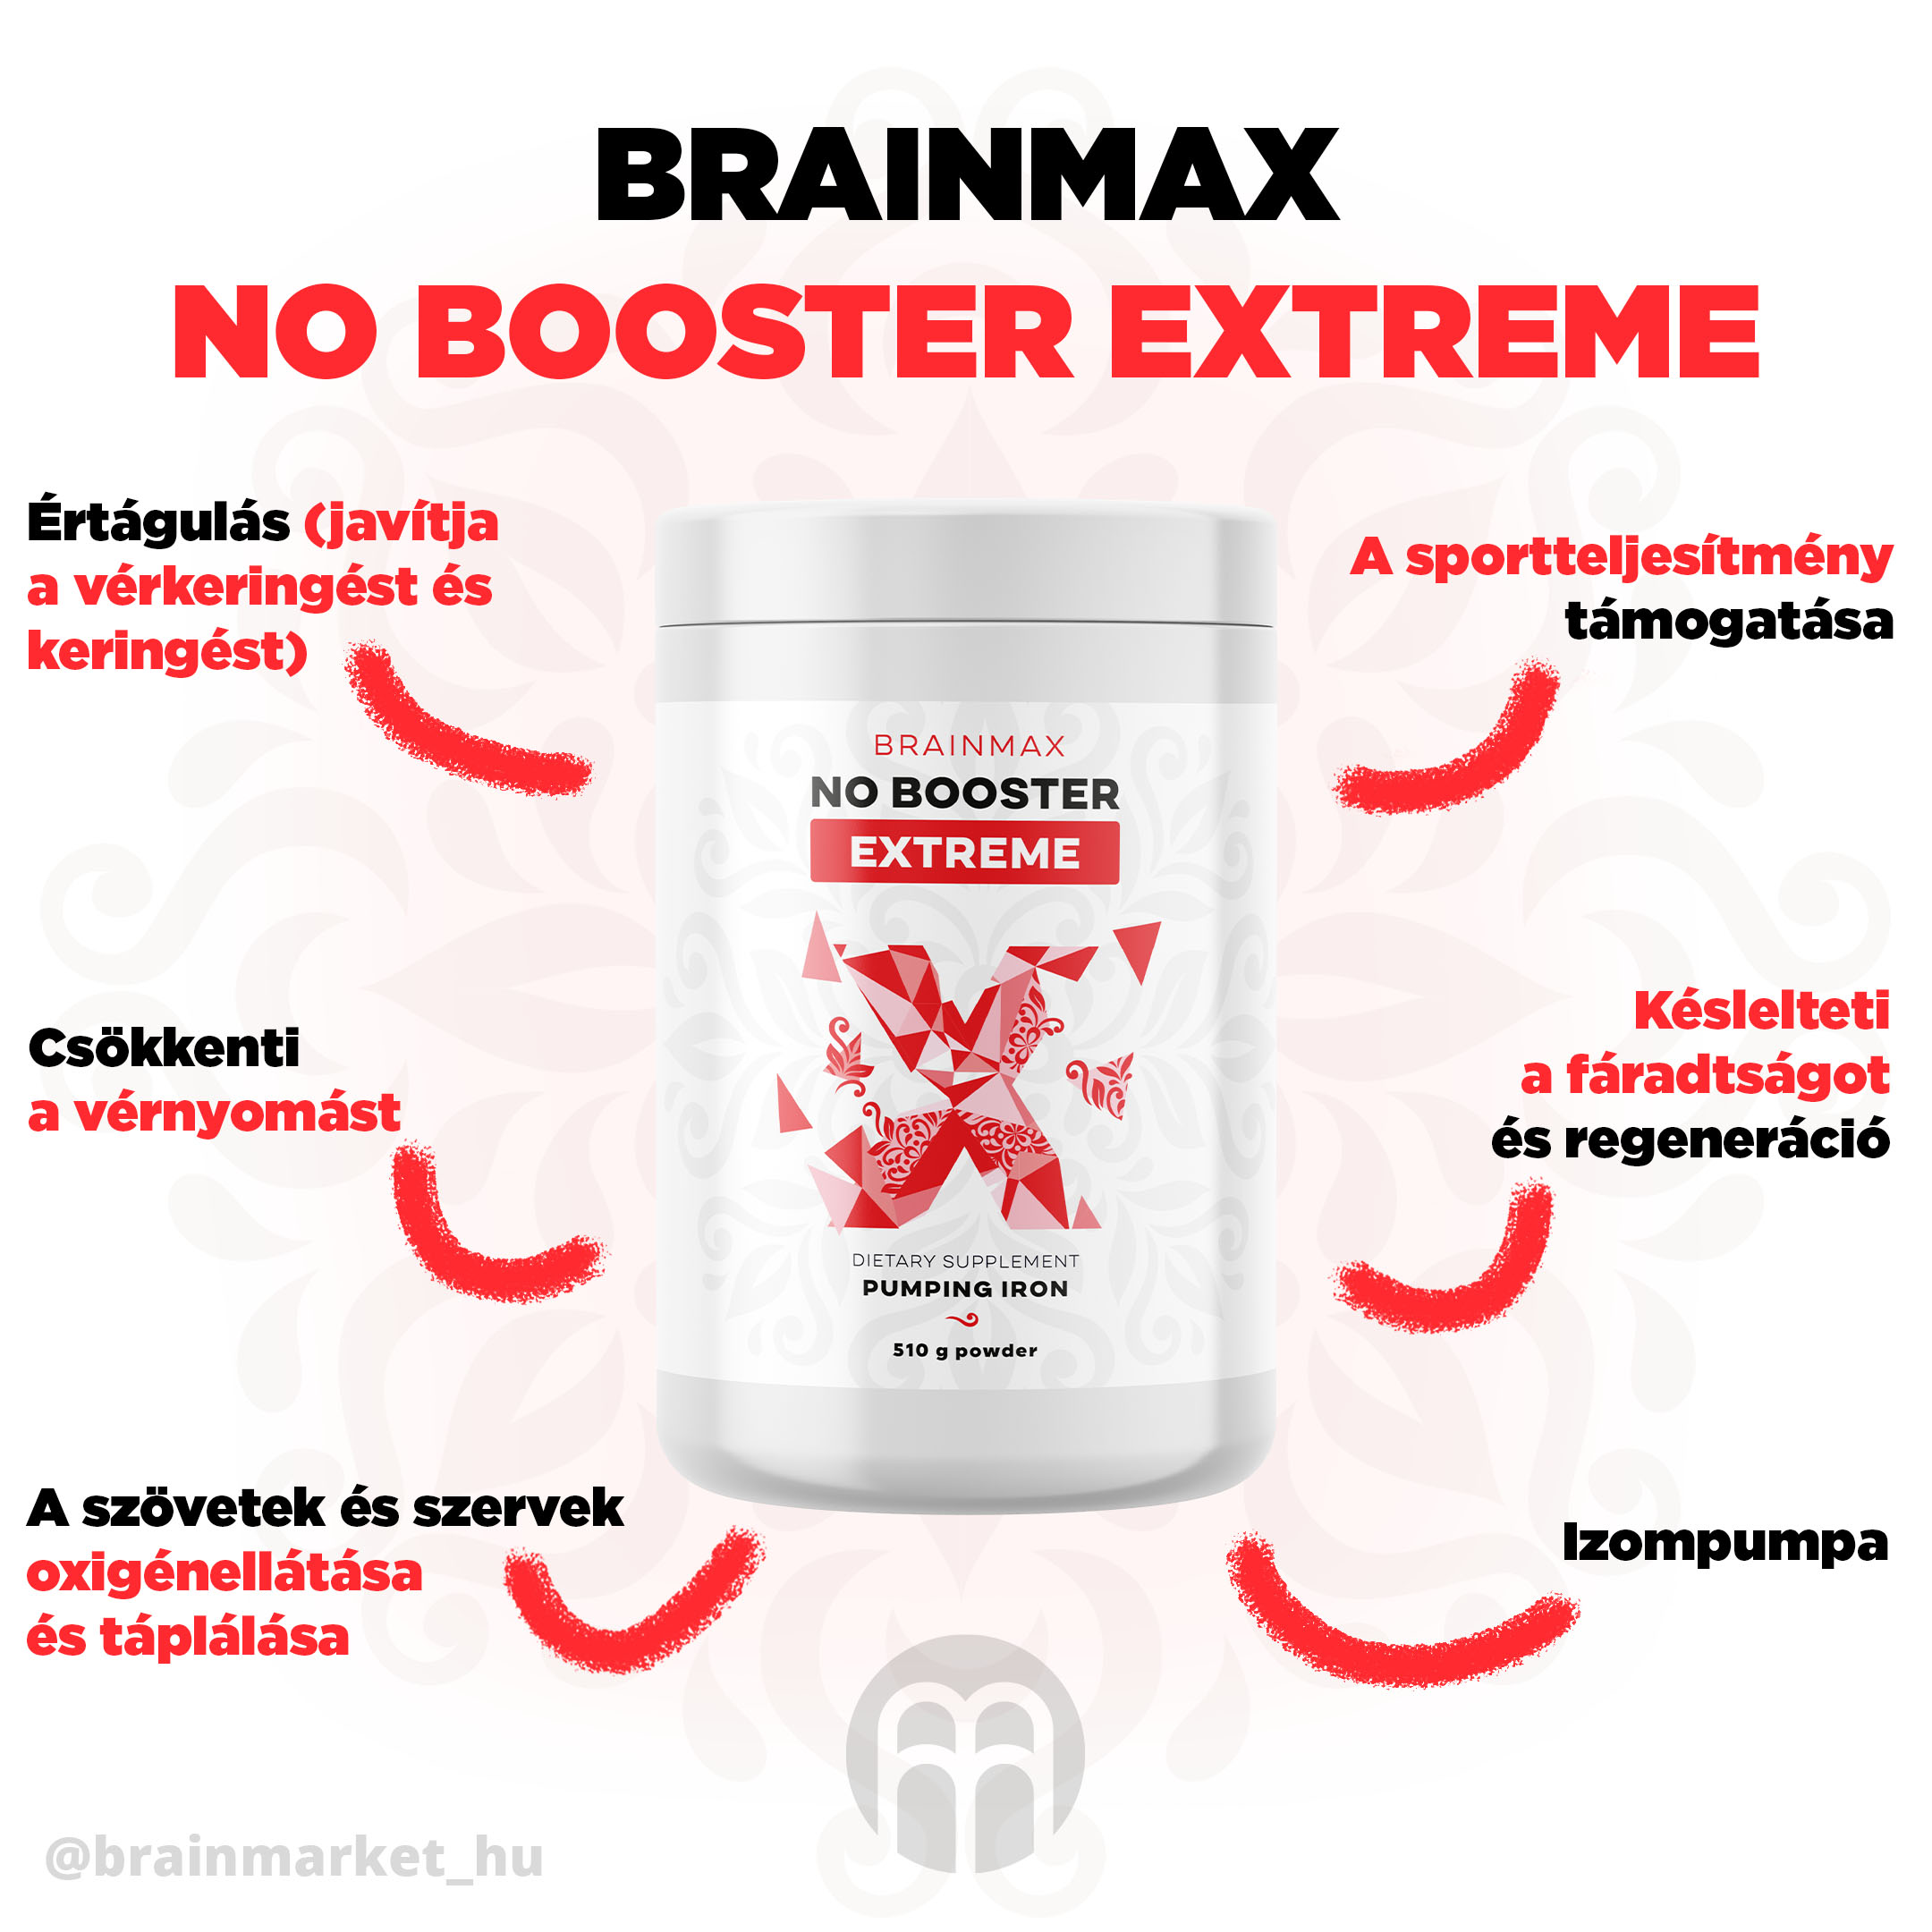 brainmax-booster-blog-infografika-brainmarket-hu